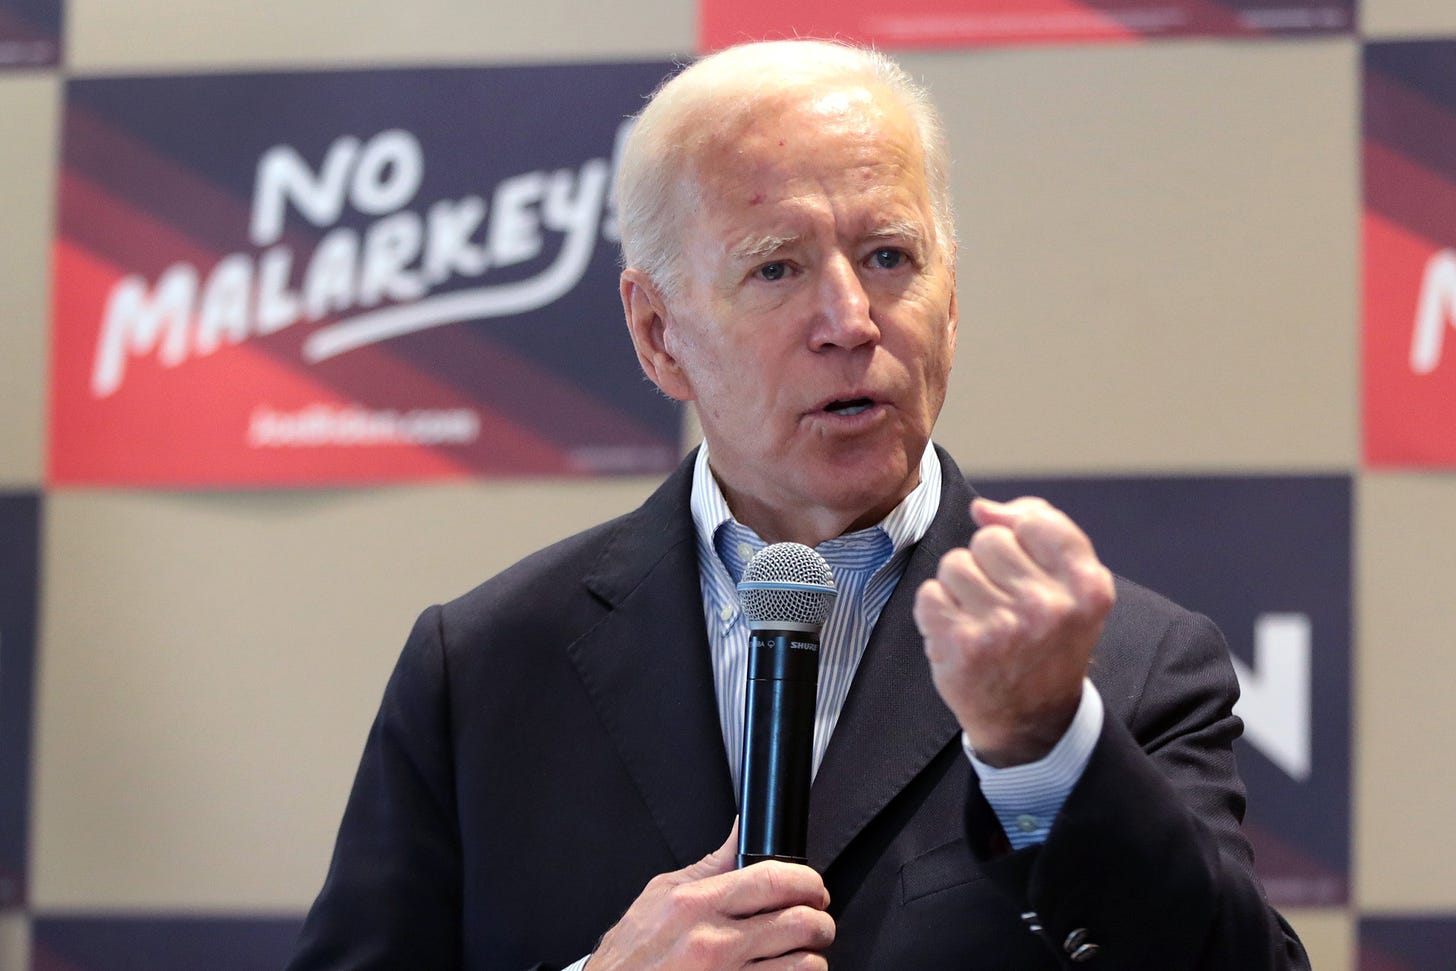 Joe Biden on Pete Buttigieg's health care plan: 'He stole it'